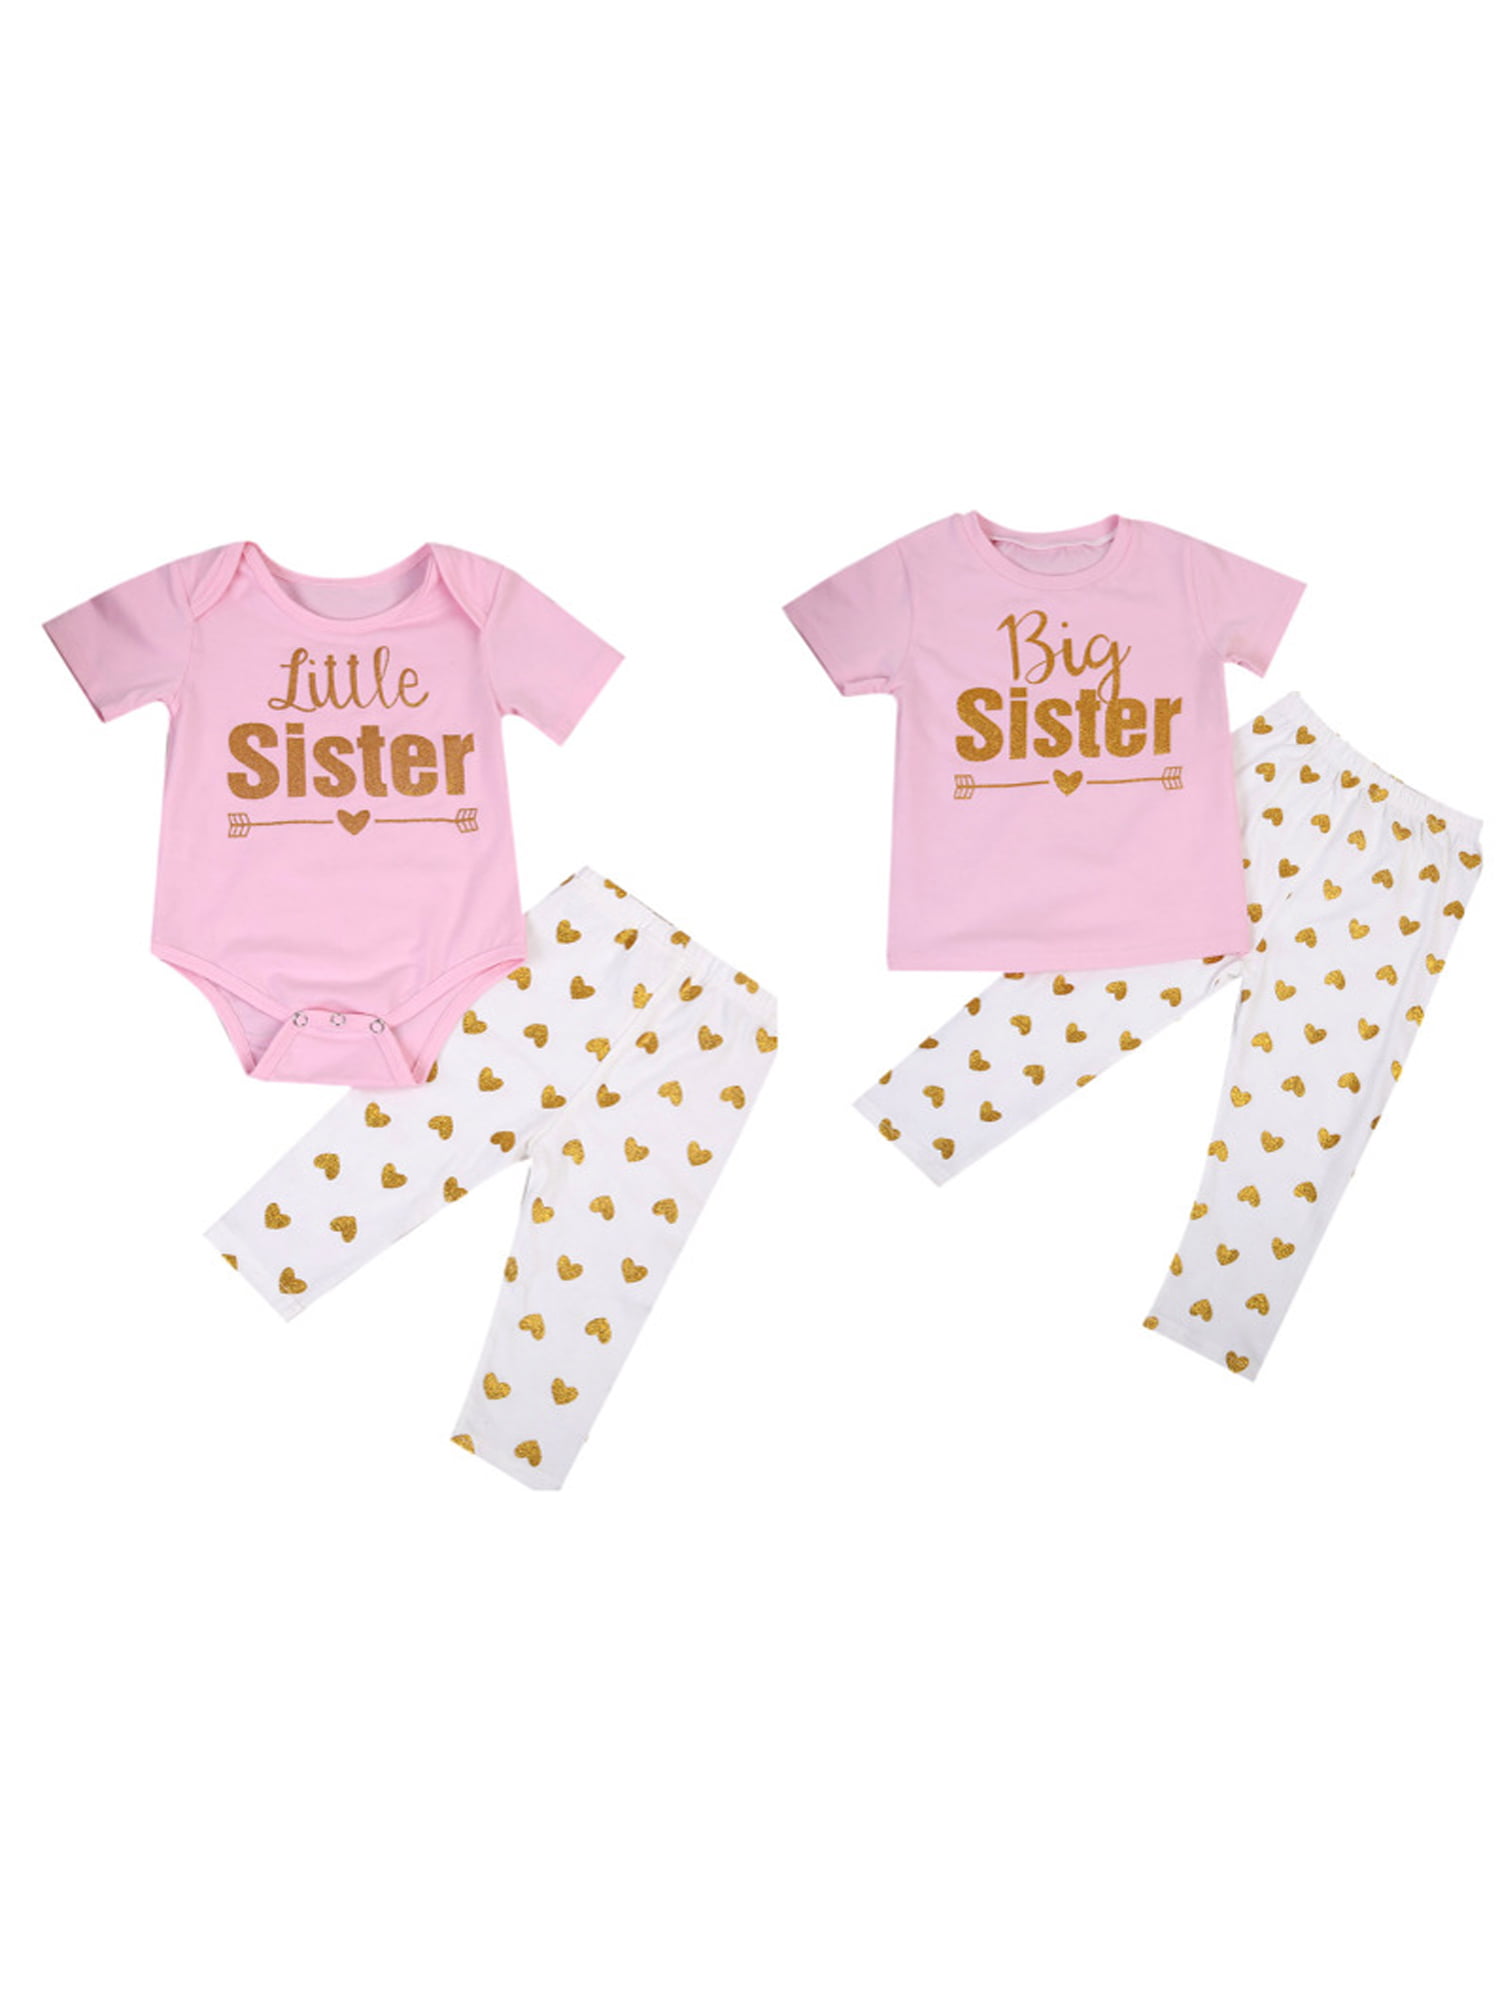 Girl Matching Outfits Baby Little Big Sister Shirt Tops Summer Pink Pyjamas Sleepwear